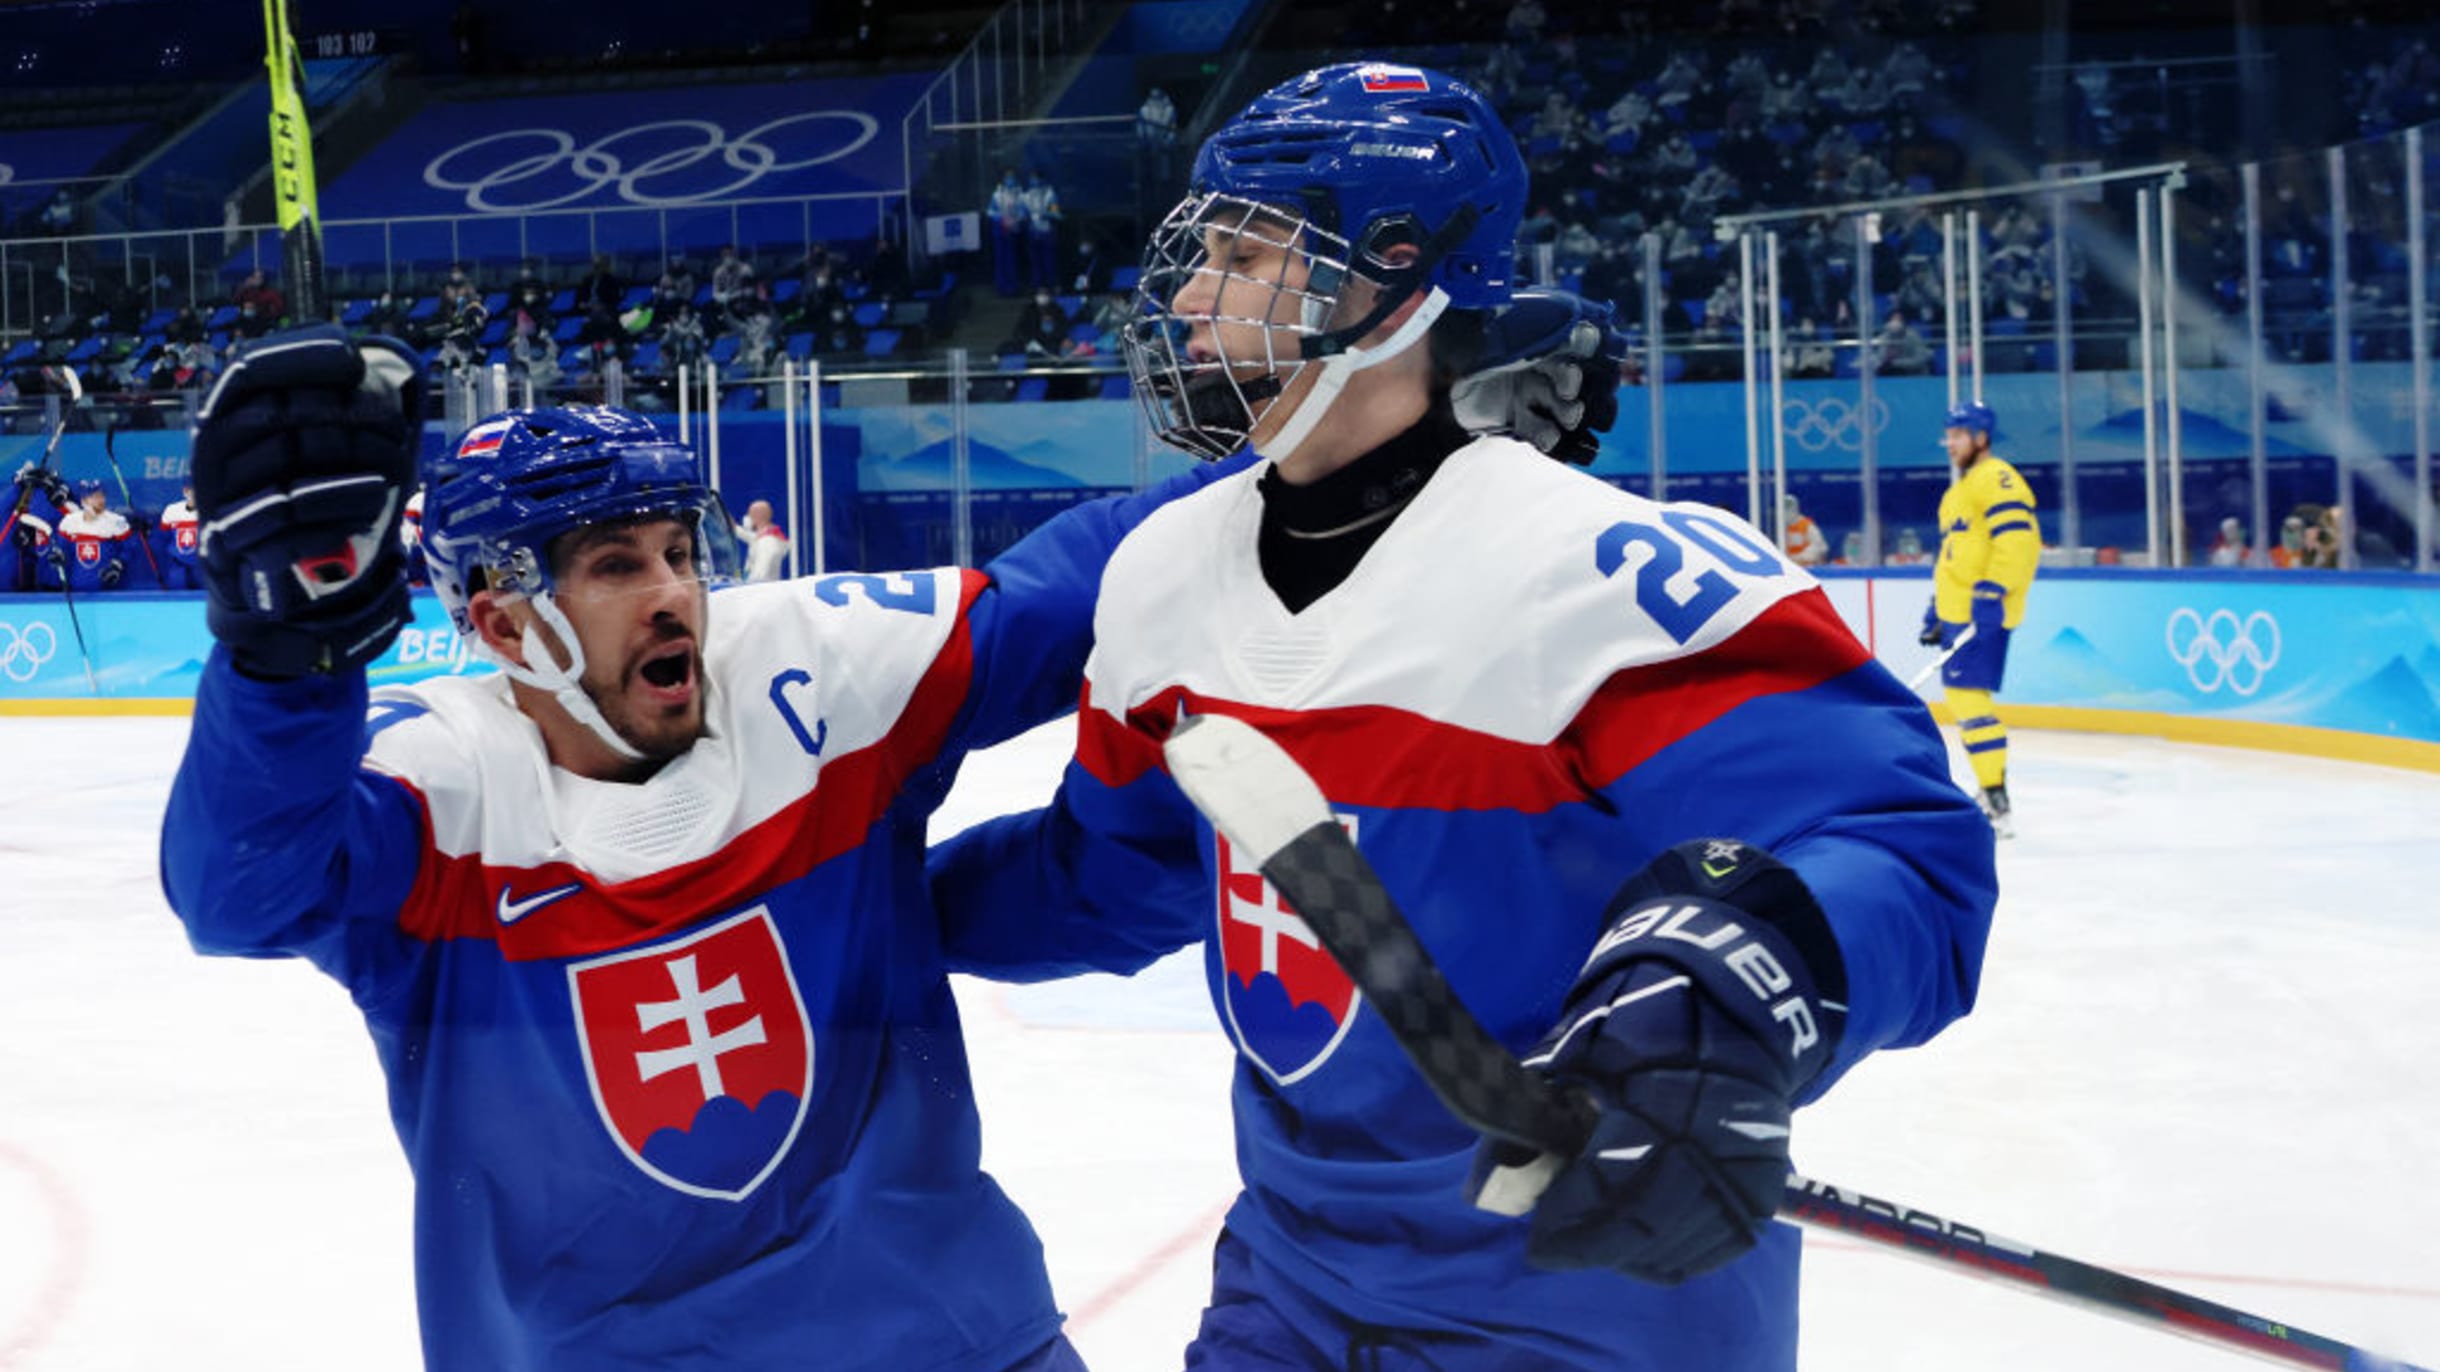 Slovakia shuts out Sweden to win Beijing 2022 mens ice hockey bronze